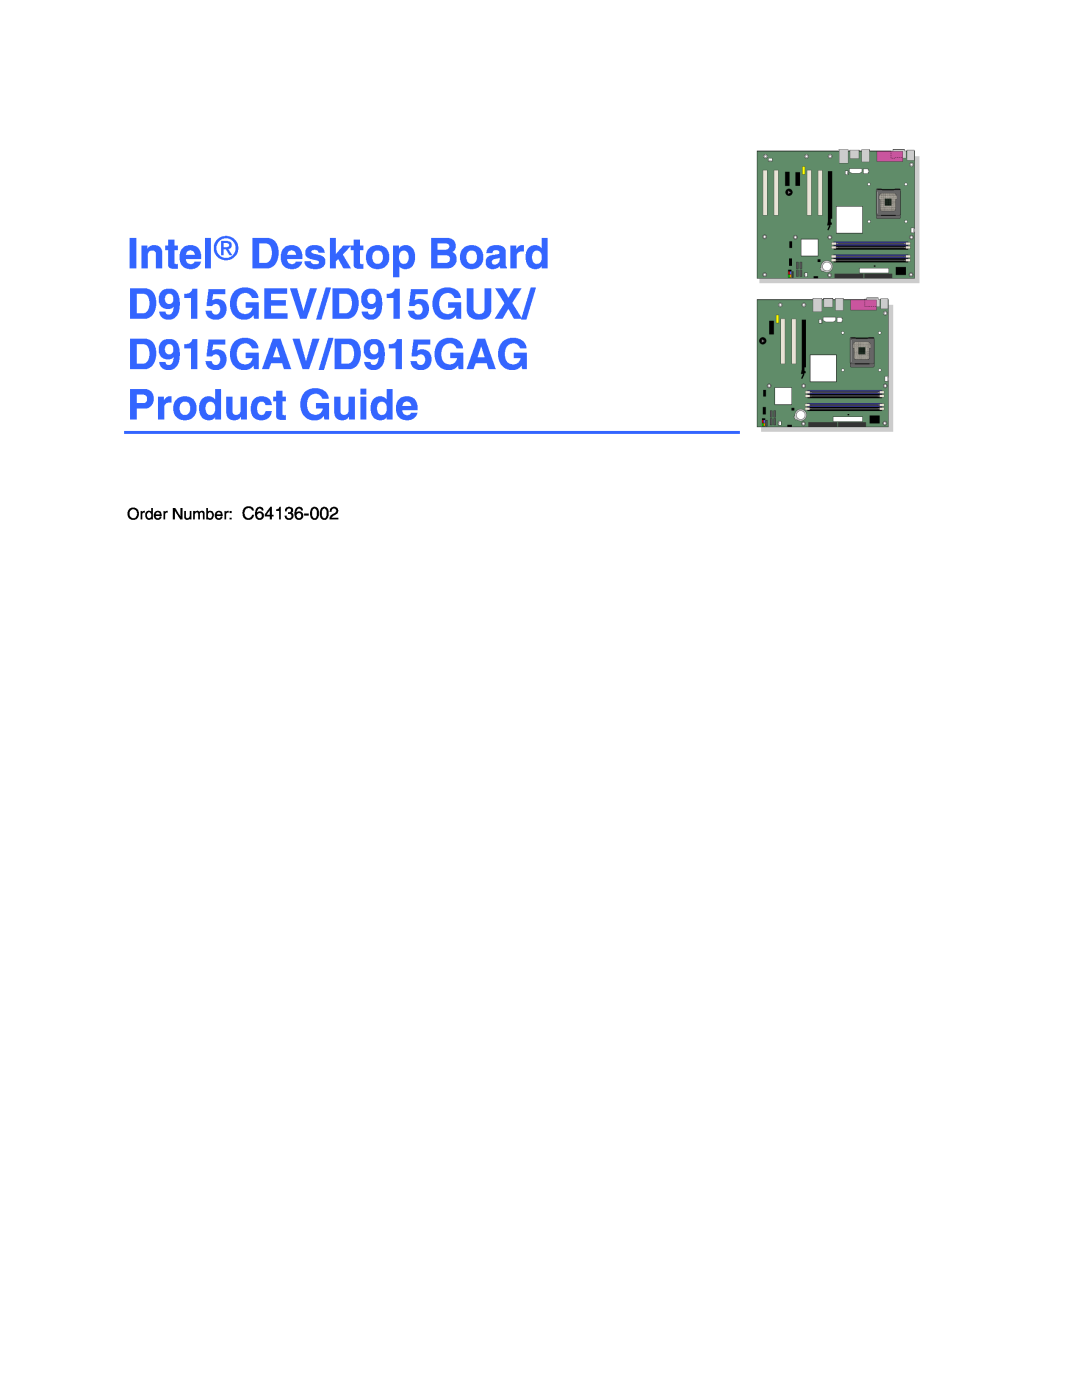 Intel manual Intel Desktop Board D915GEV/D915GUX, D915GAV/D915GAG Product Guide, Order Number C64136-002 